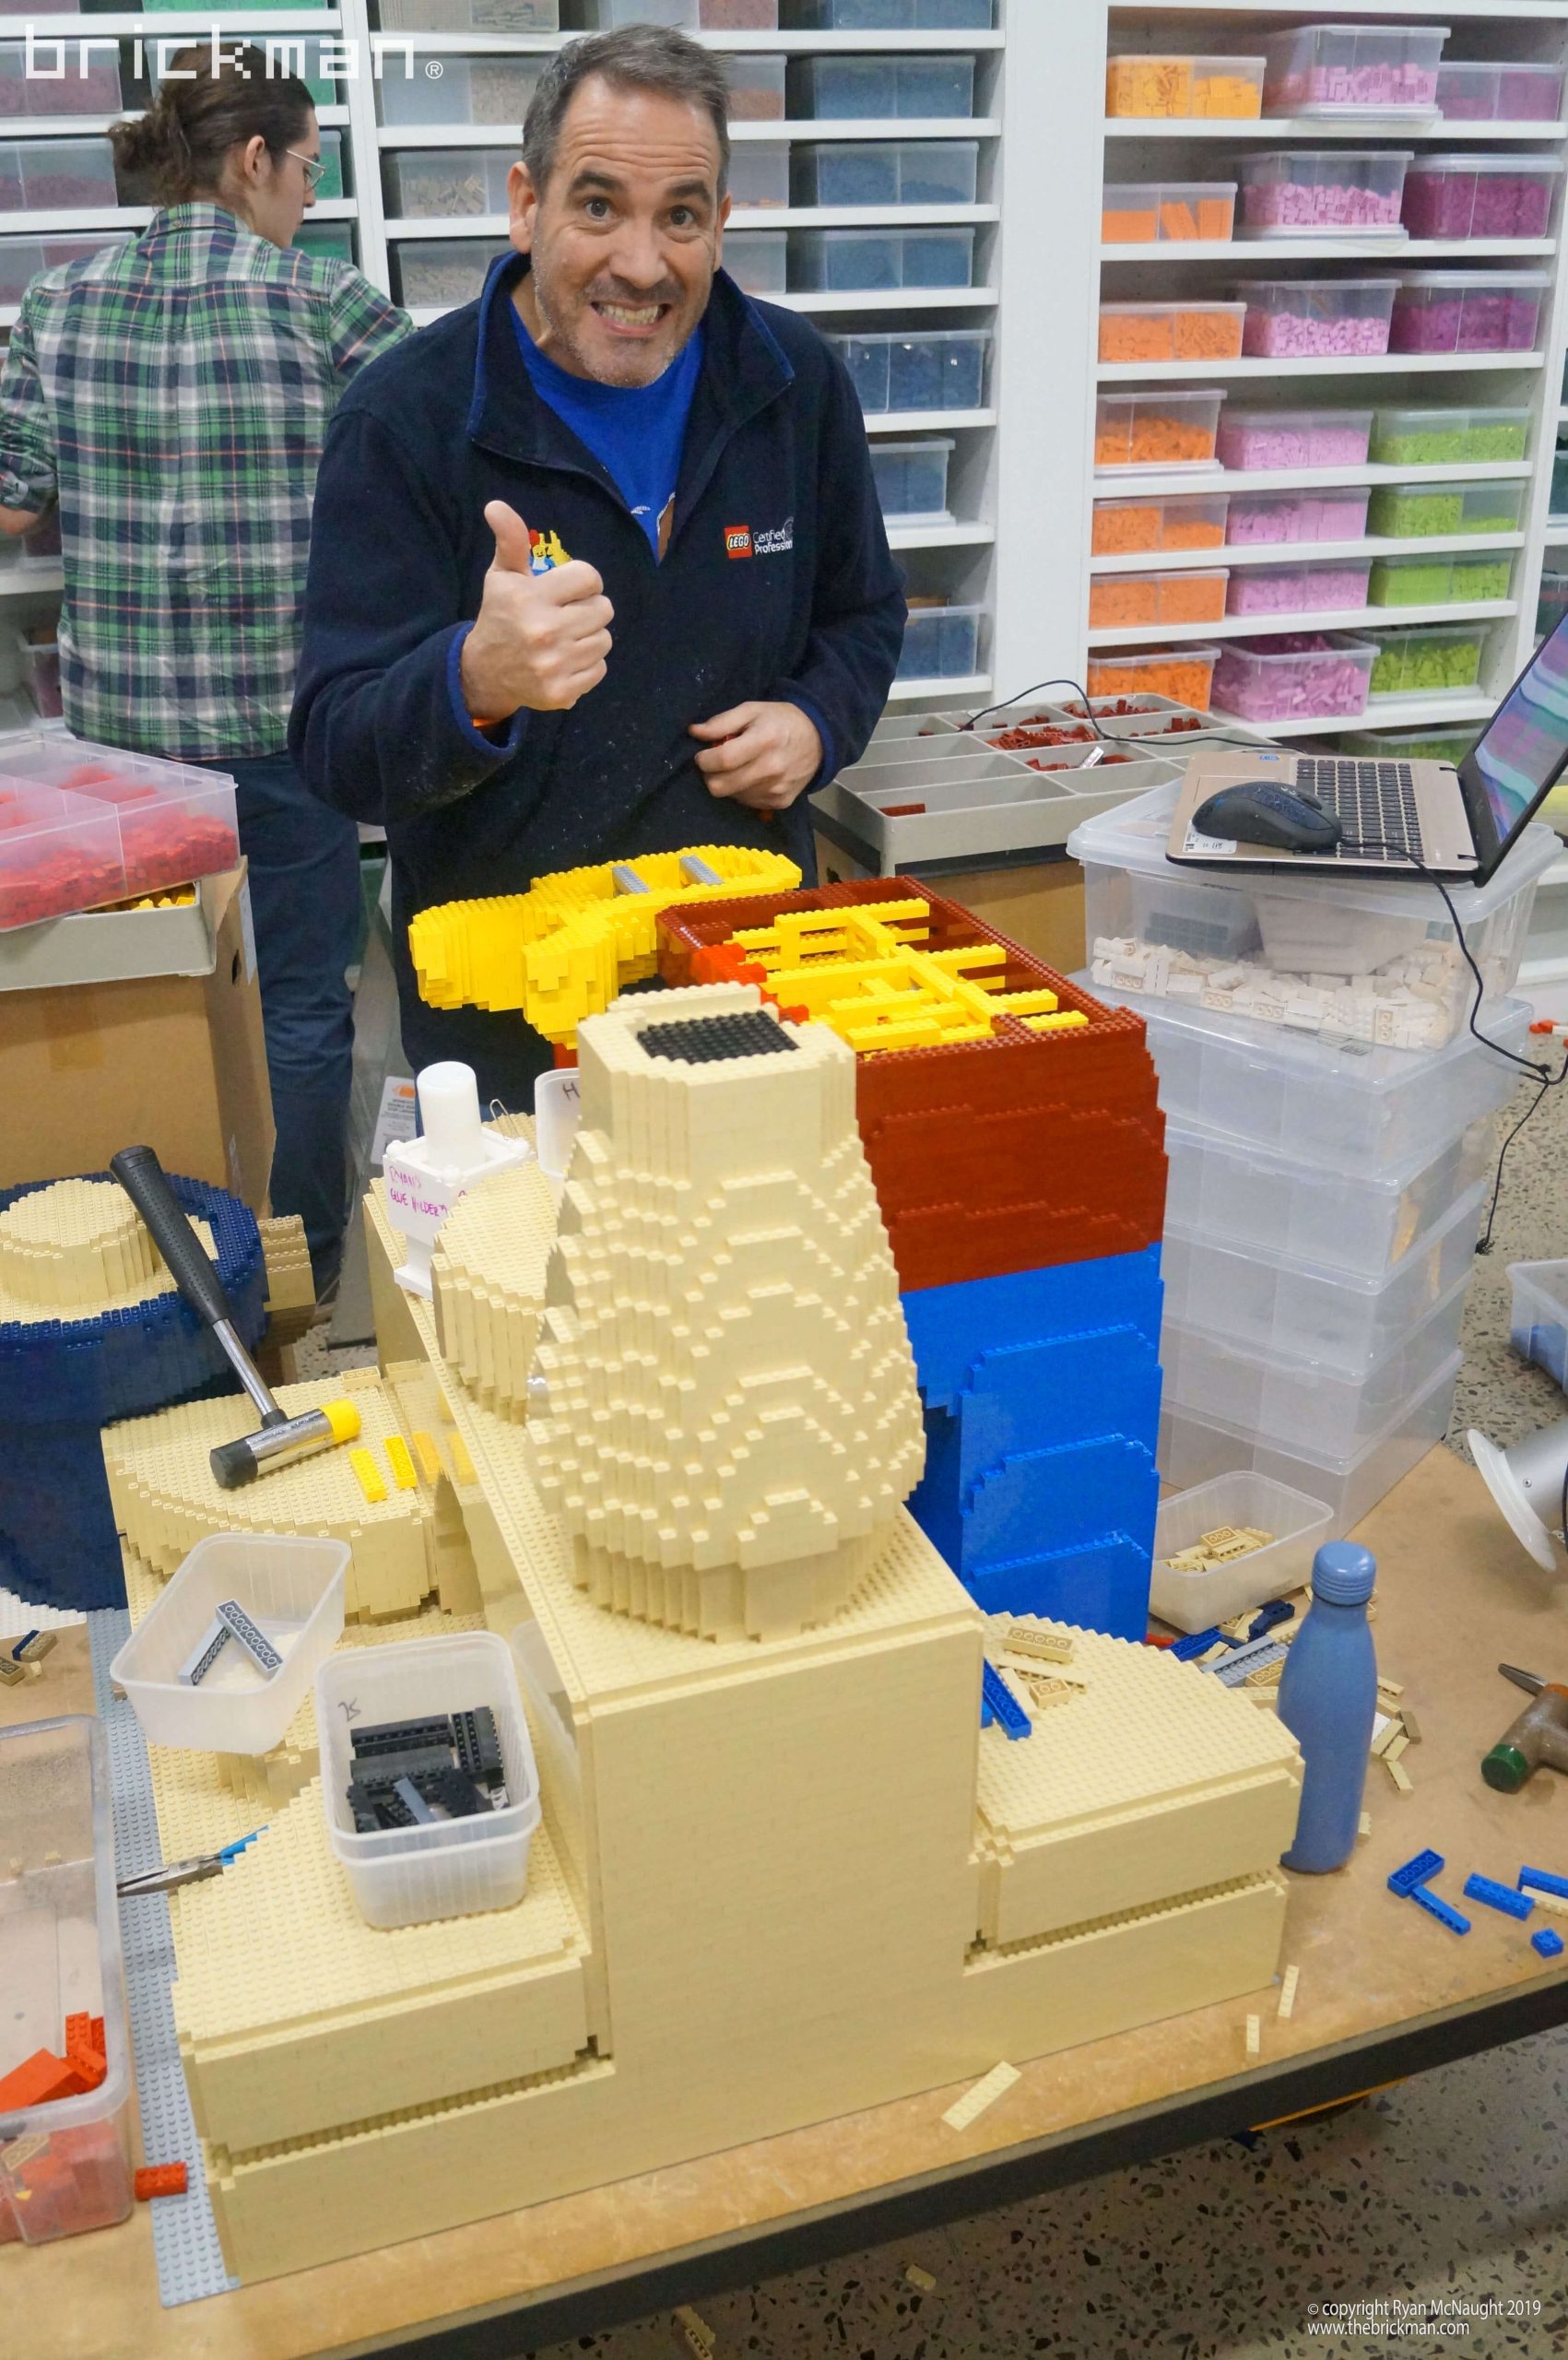 Ryan building Robina's LEGO model